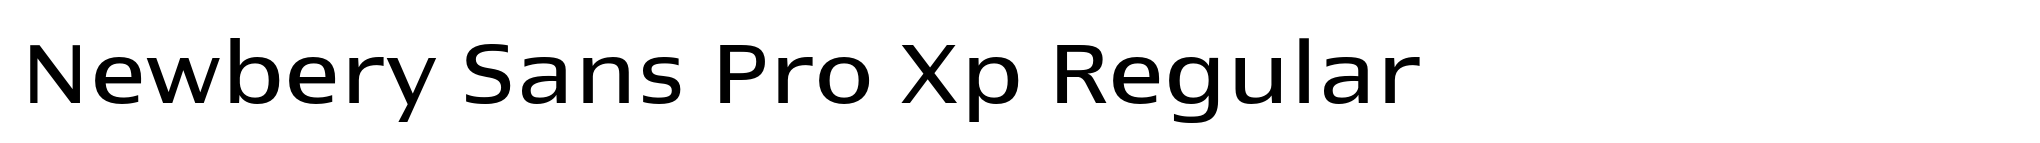 Newbery Sans Pro Xp Regular image